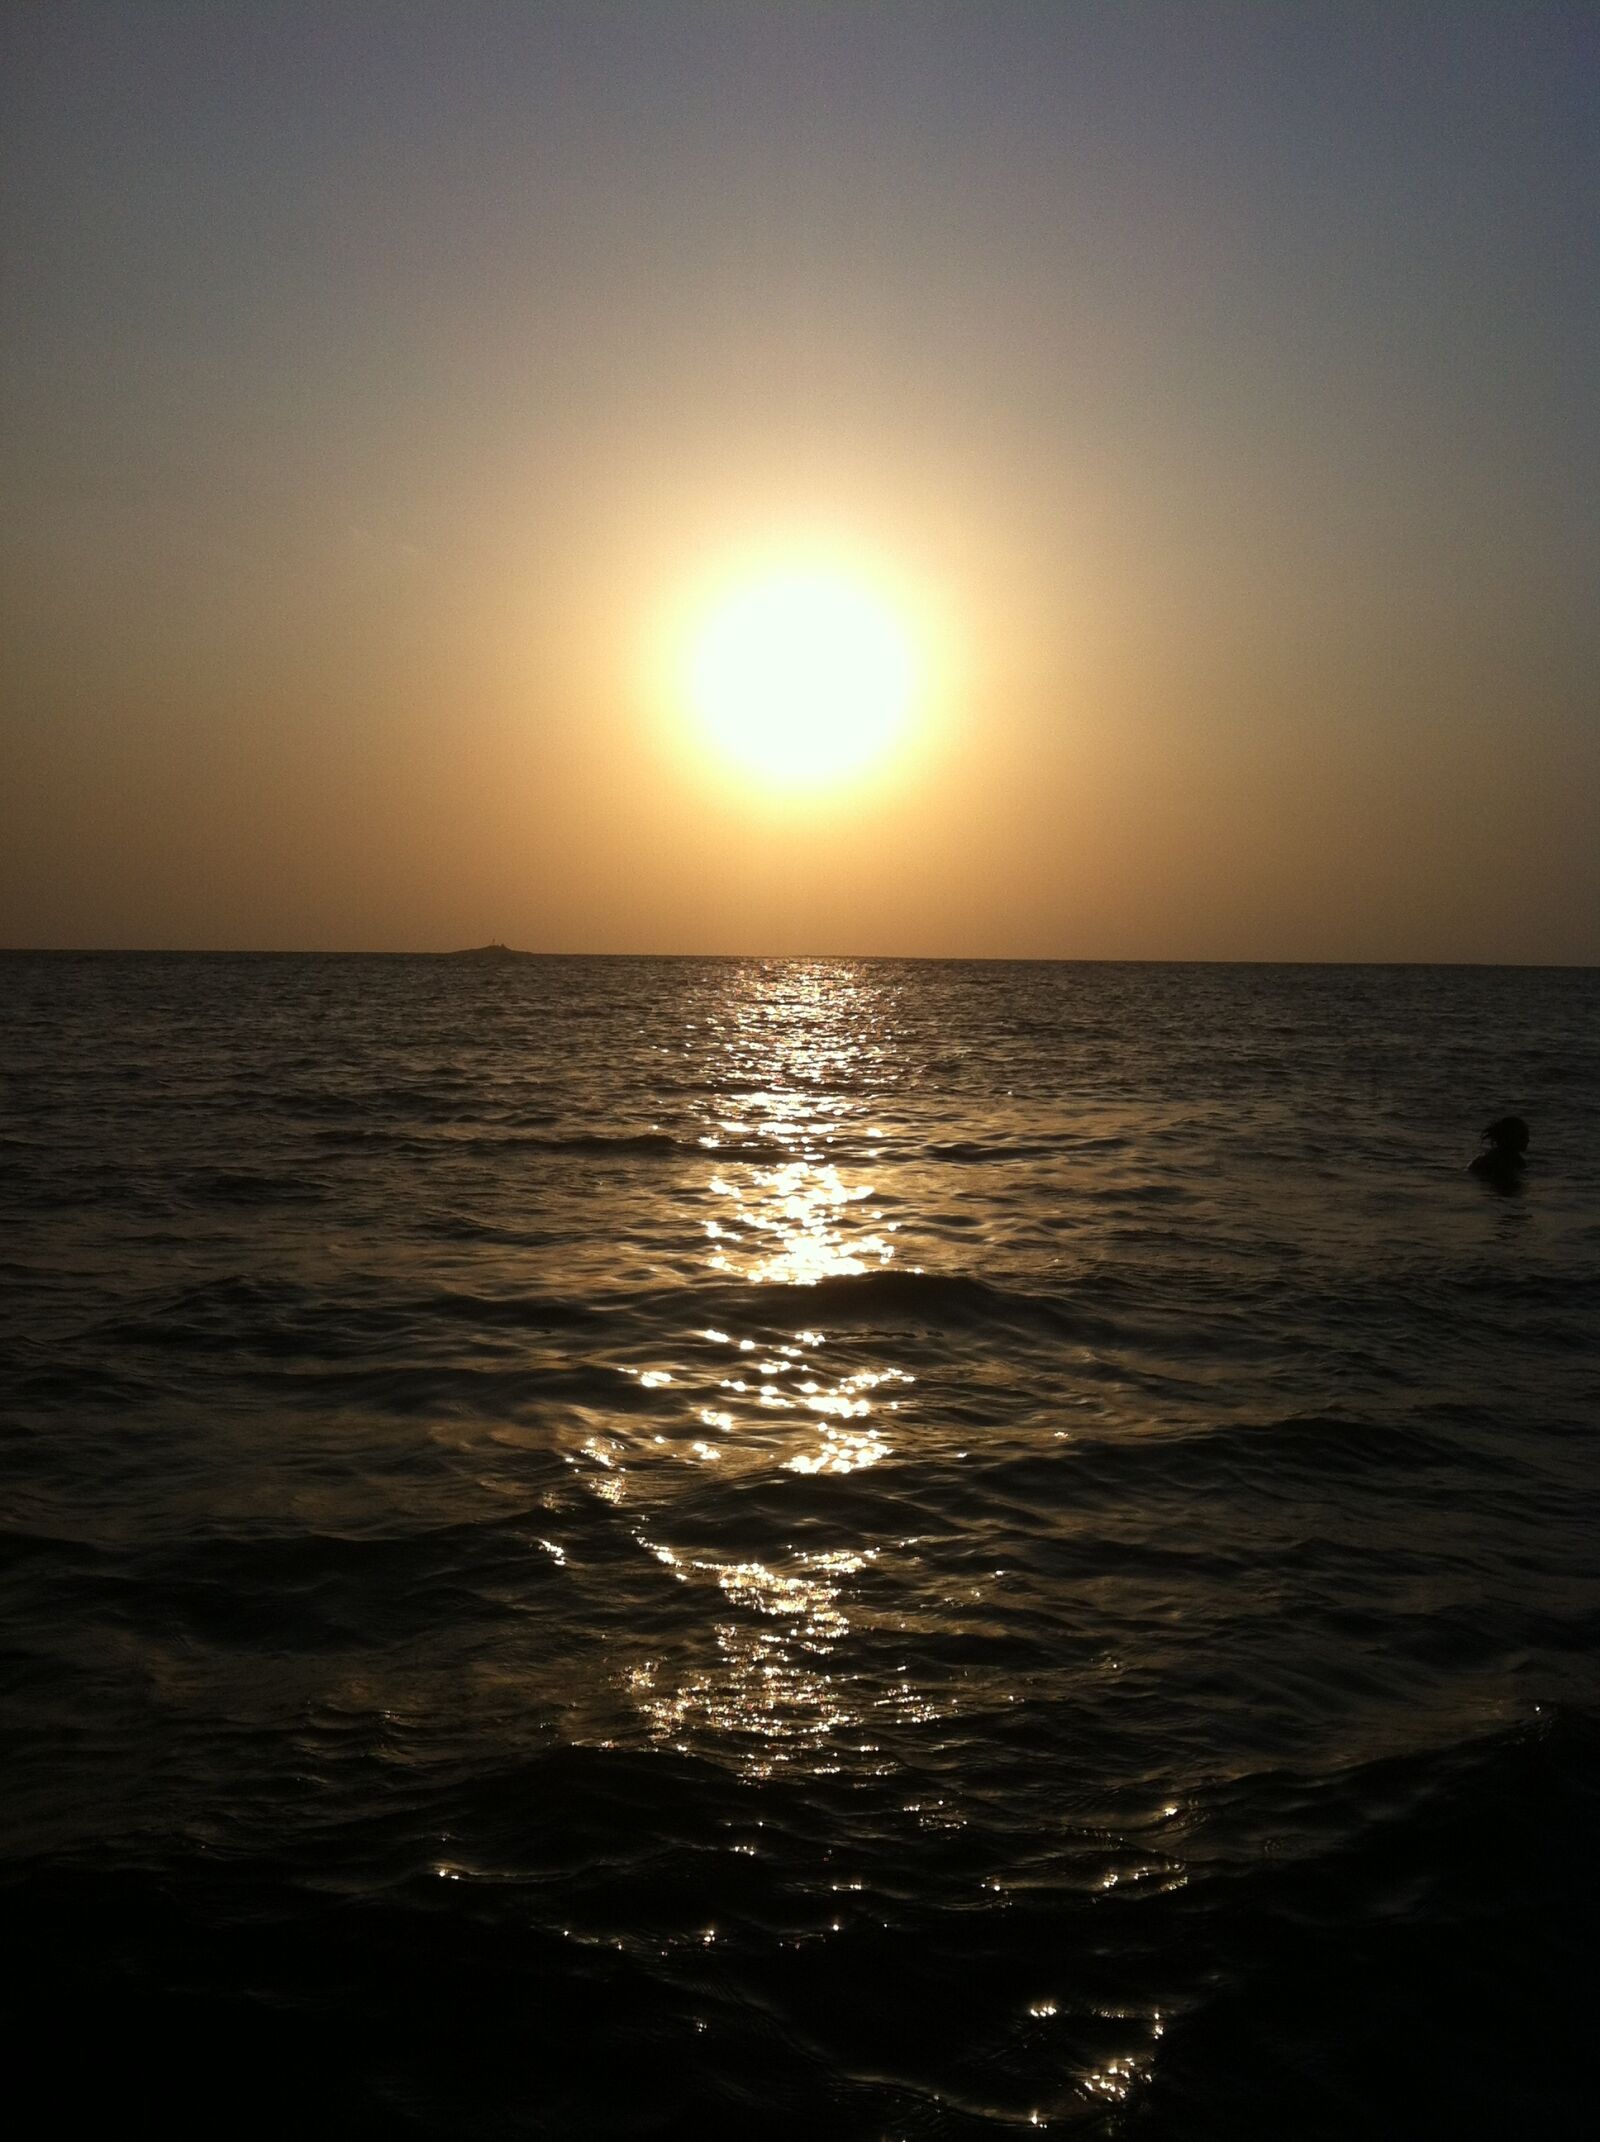 Apple iPhone 4 + iPhone 4 back camera 3.85mm f/2.8 sample photo. Nature, sunset, beach, iphone photography